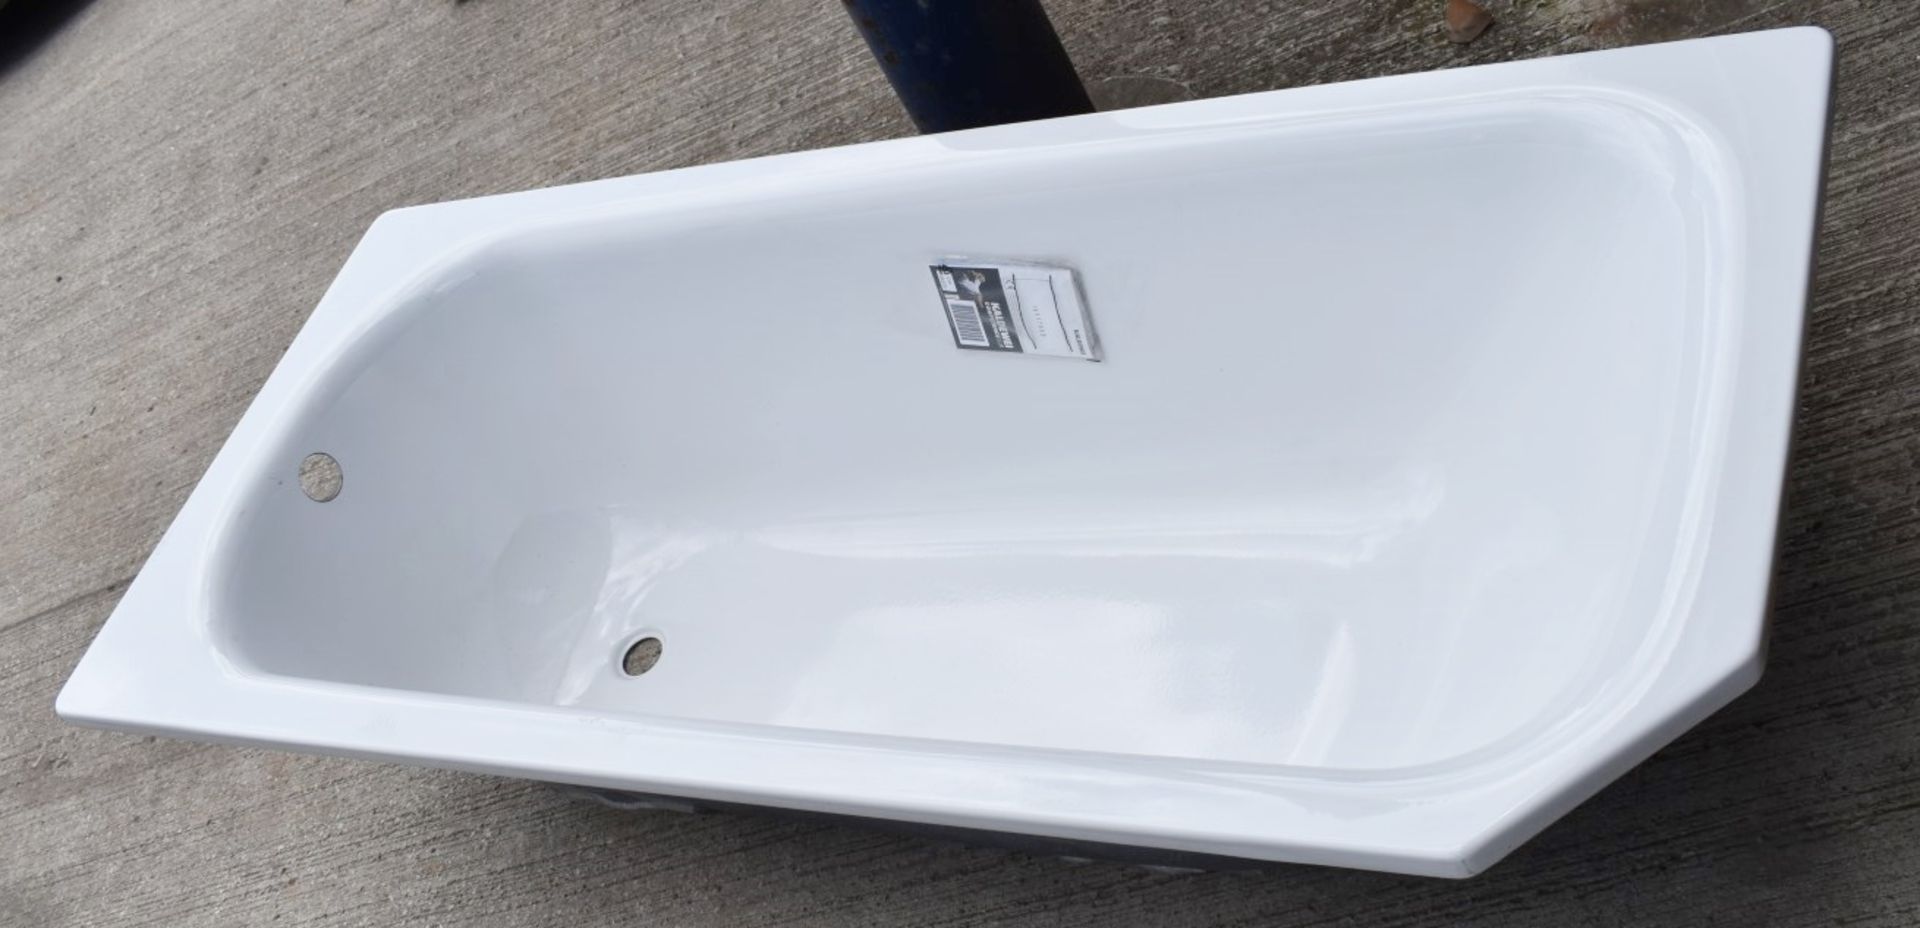 1 x KALDEWEI 'Saniform V2' Steel Enamel Bath In Alpine White (Mod.362-1) - RRP £564.00 - Image 4 of 10